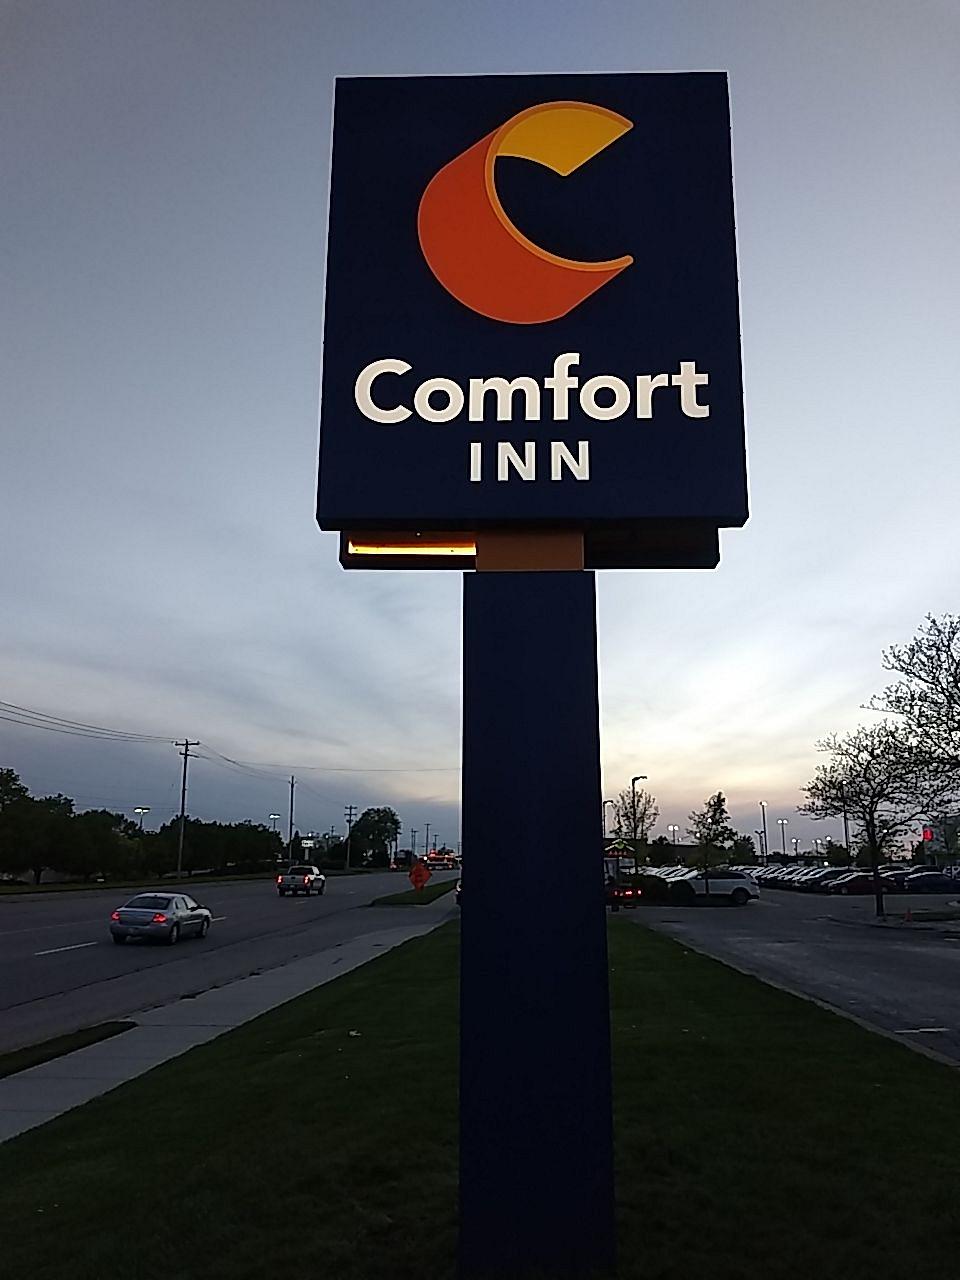 Comfort Inn Pylon Pole sign illuminating aluminum cover night view